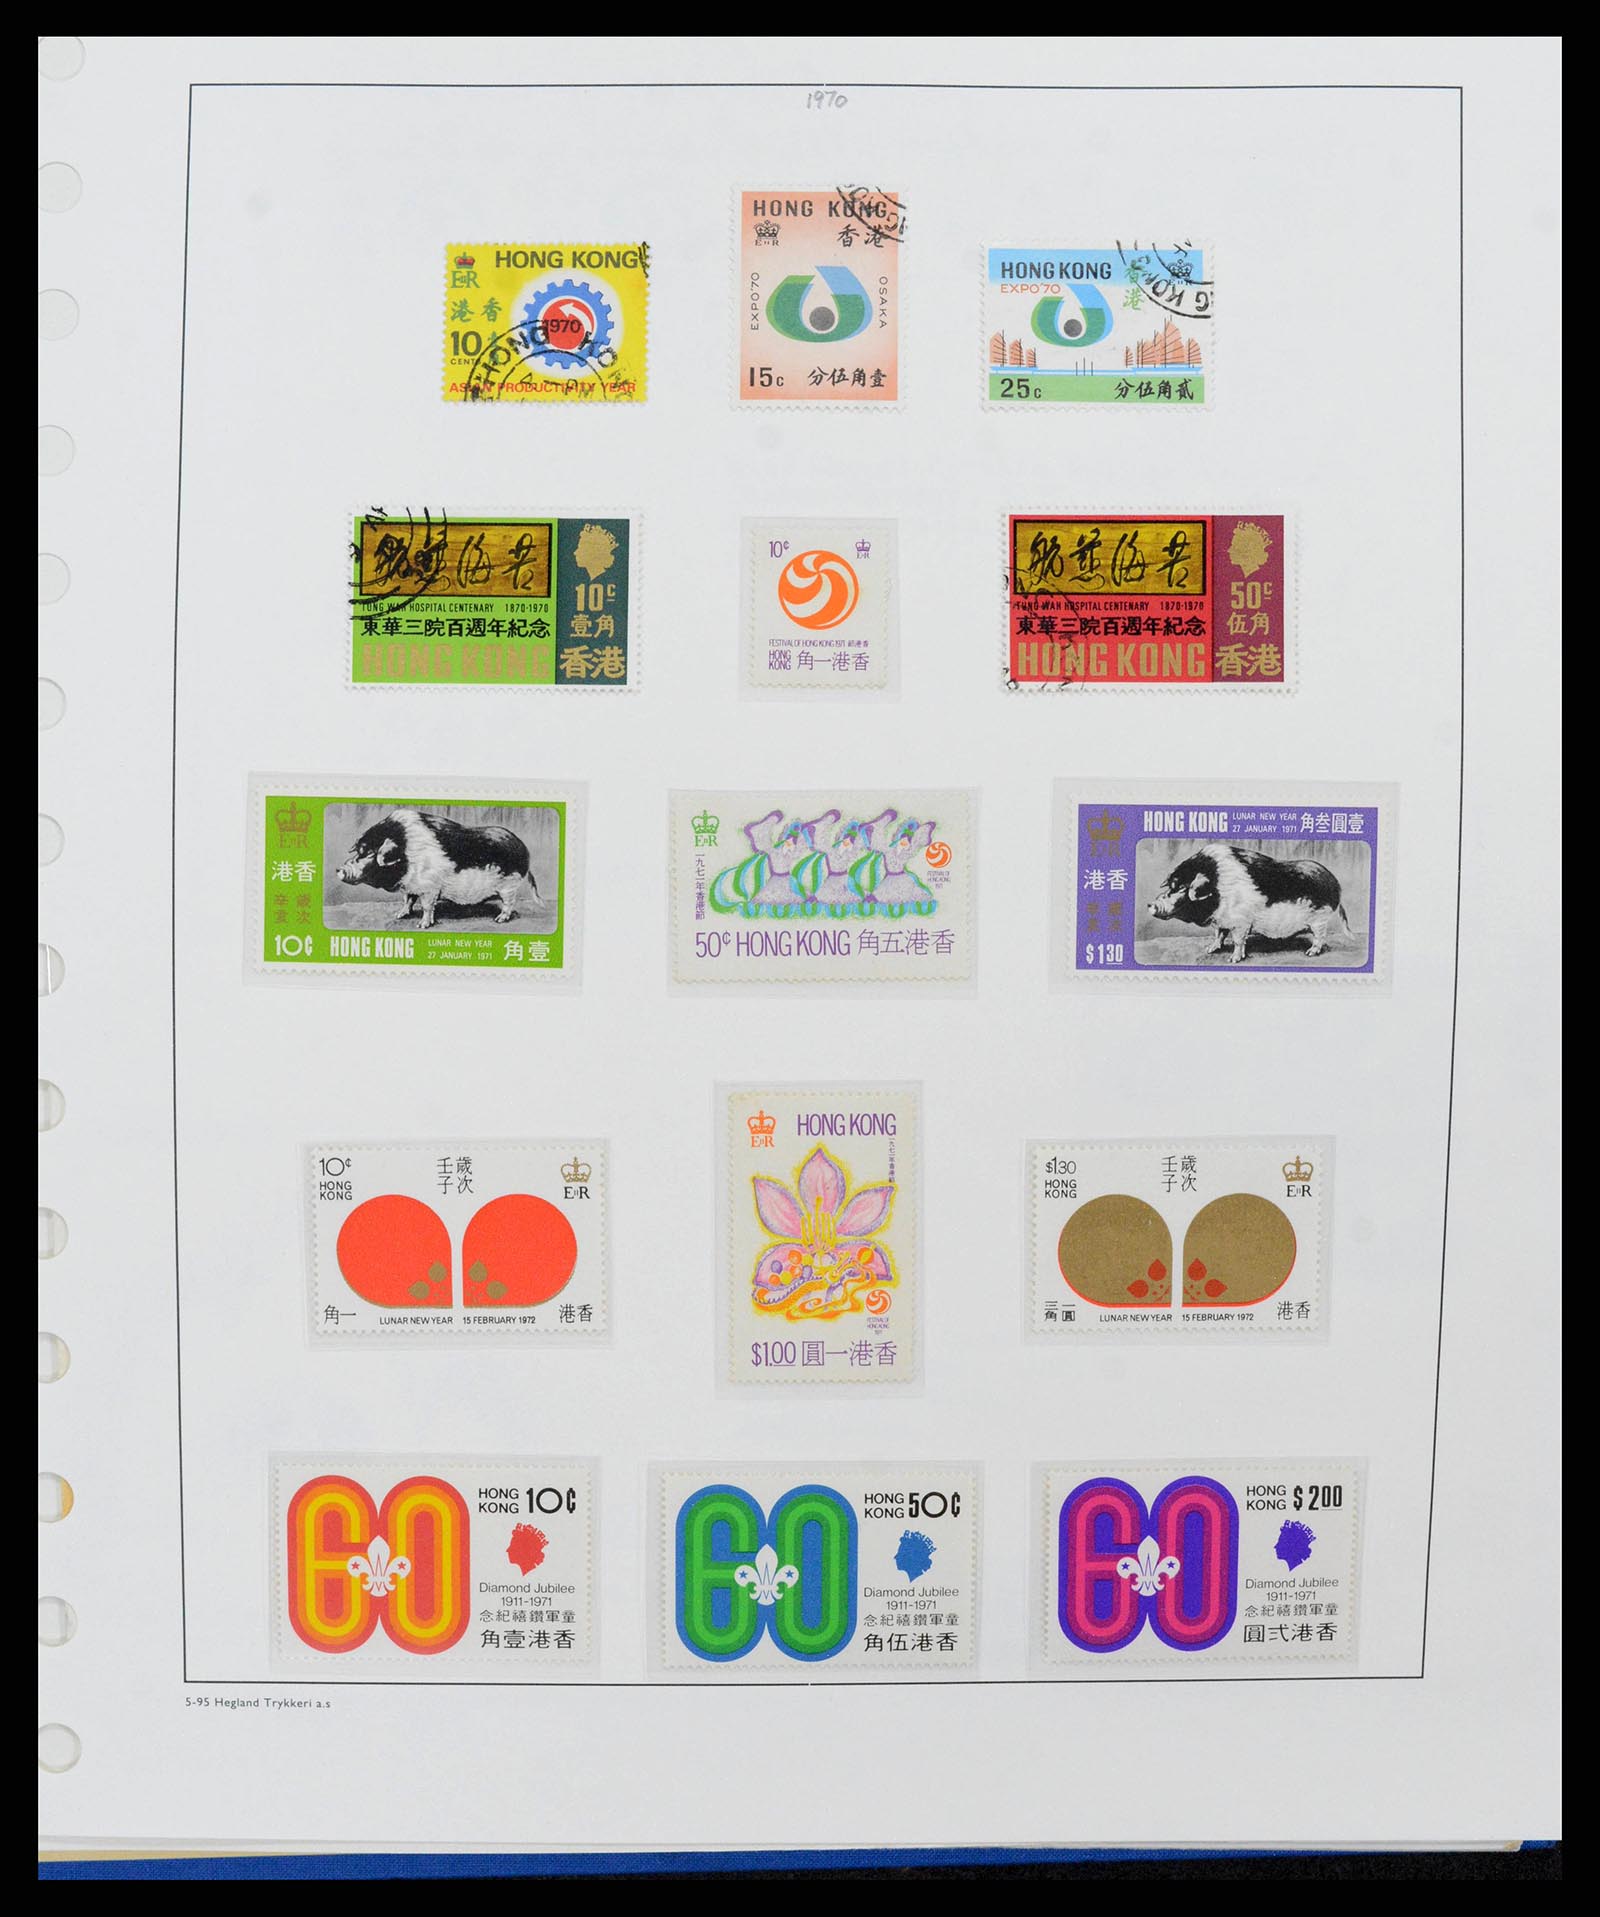 37955 0060 - Stamp collection 37955 Hong Kong supercollection 1862-2007.